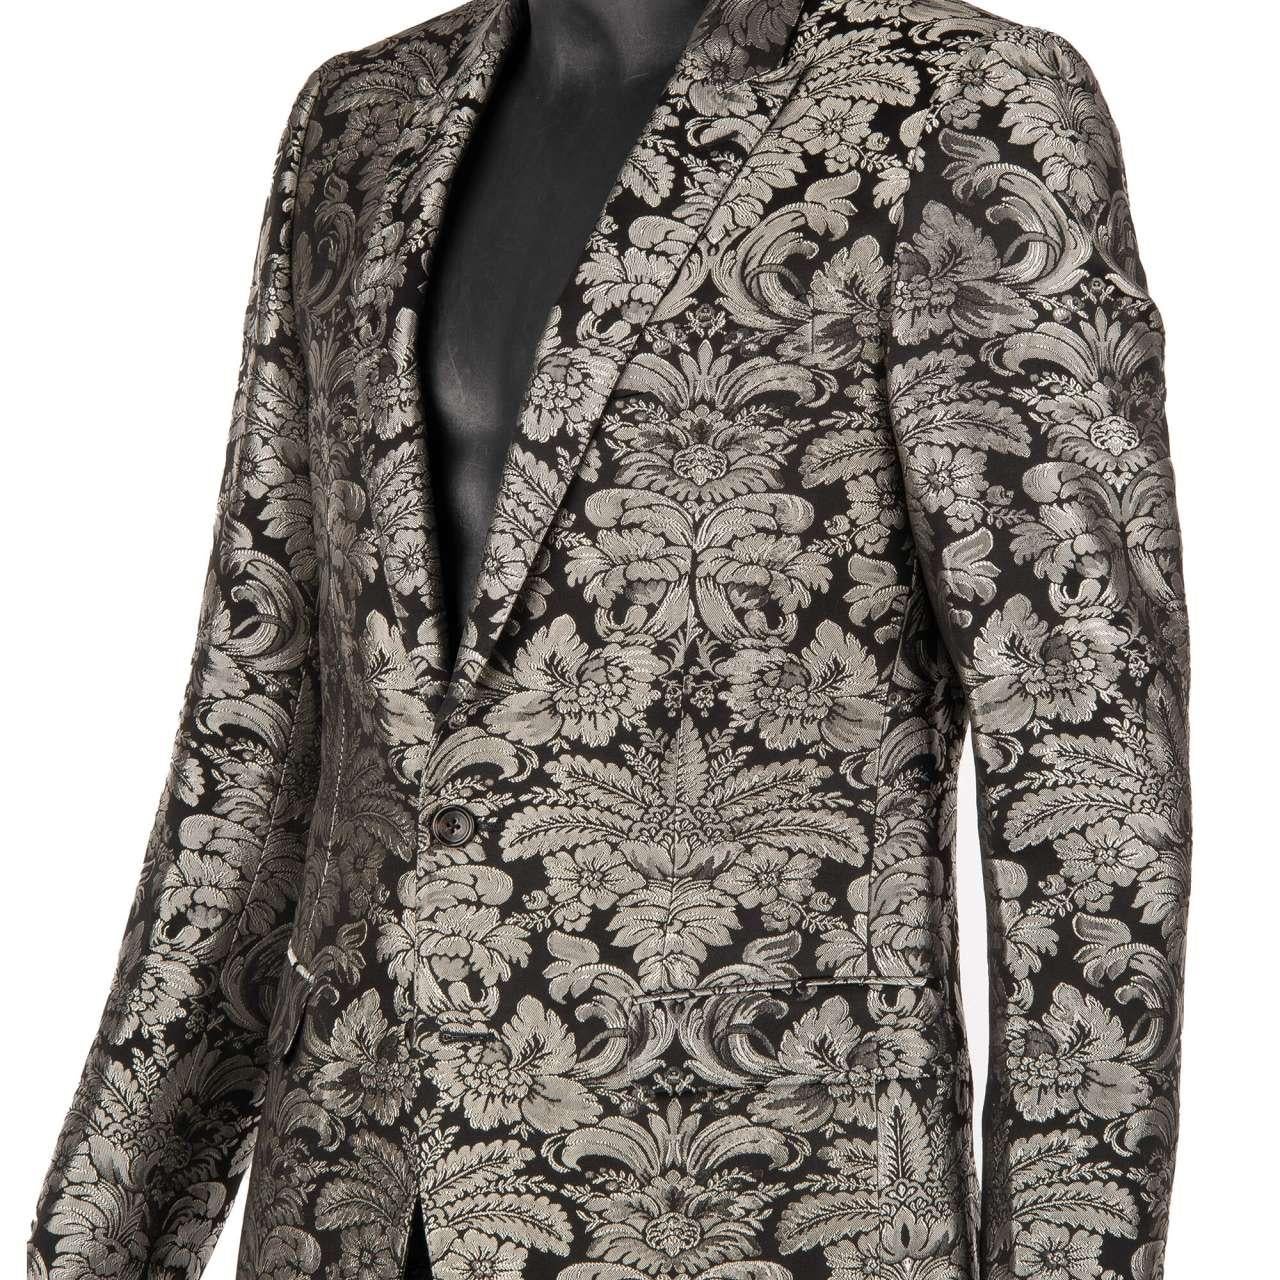 Dolce & Gabbana - Baroque Flower Jacquard Suit MARTINI Silver Black 50 For Sale 4